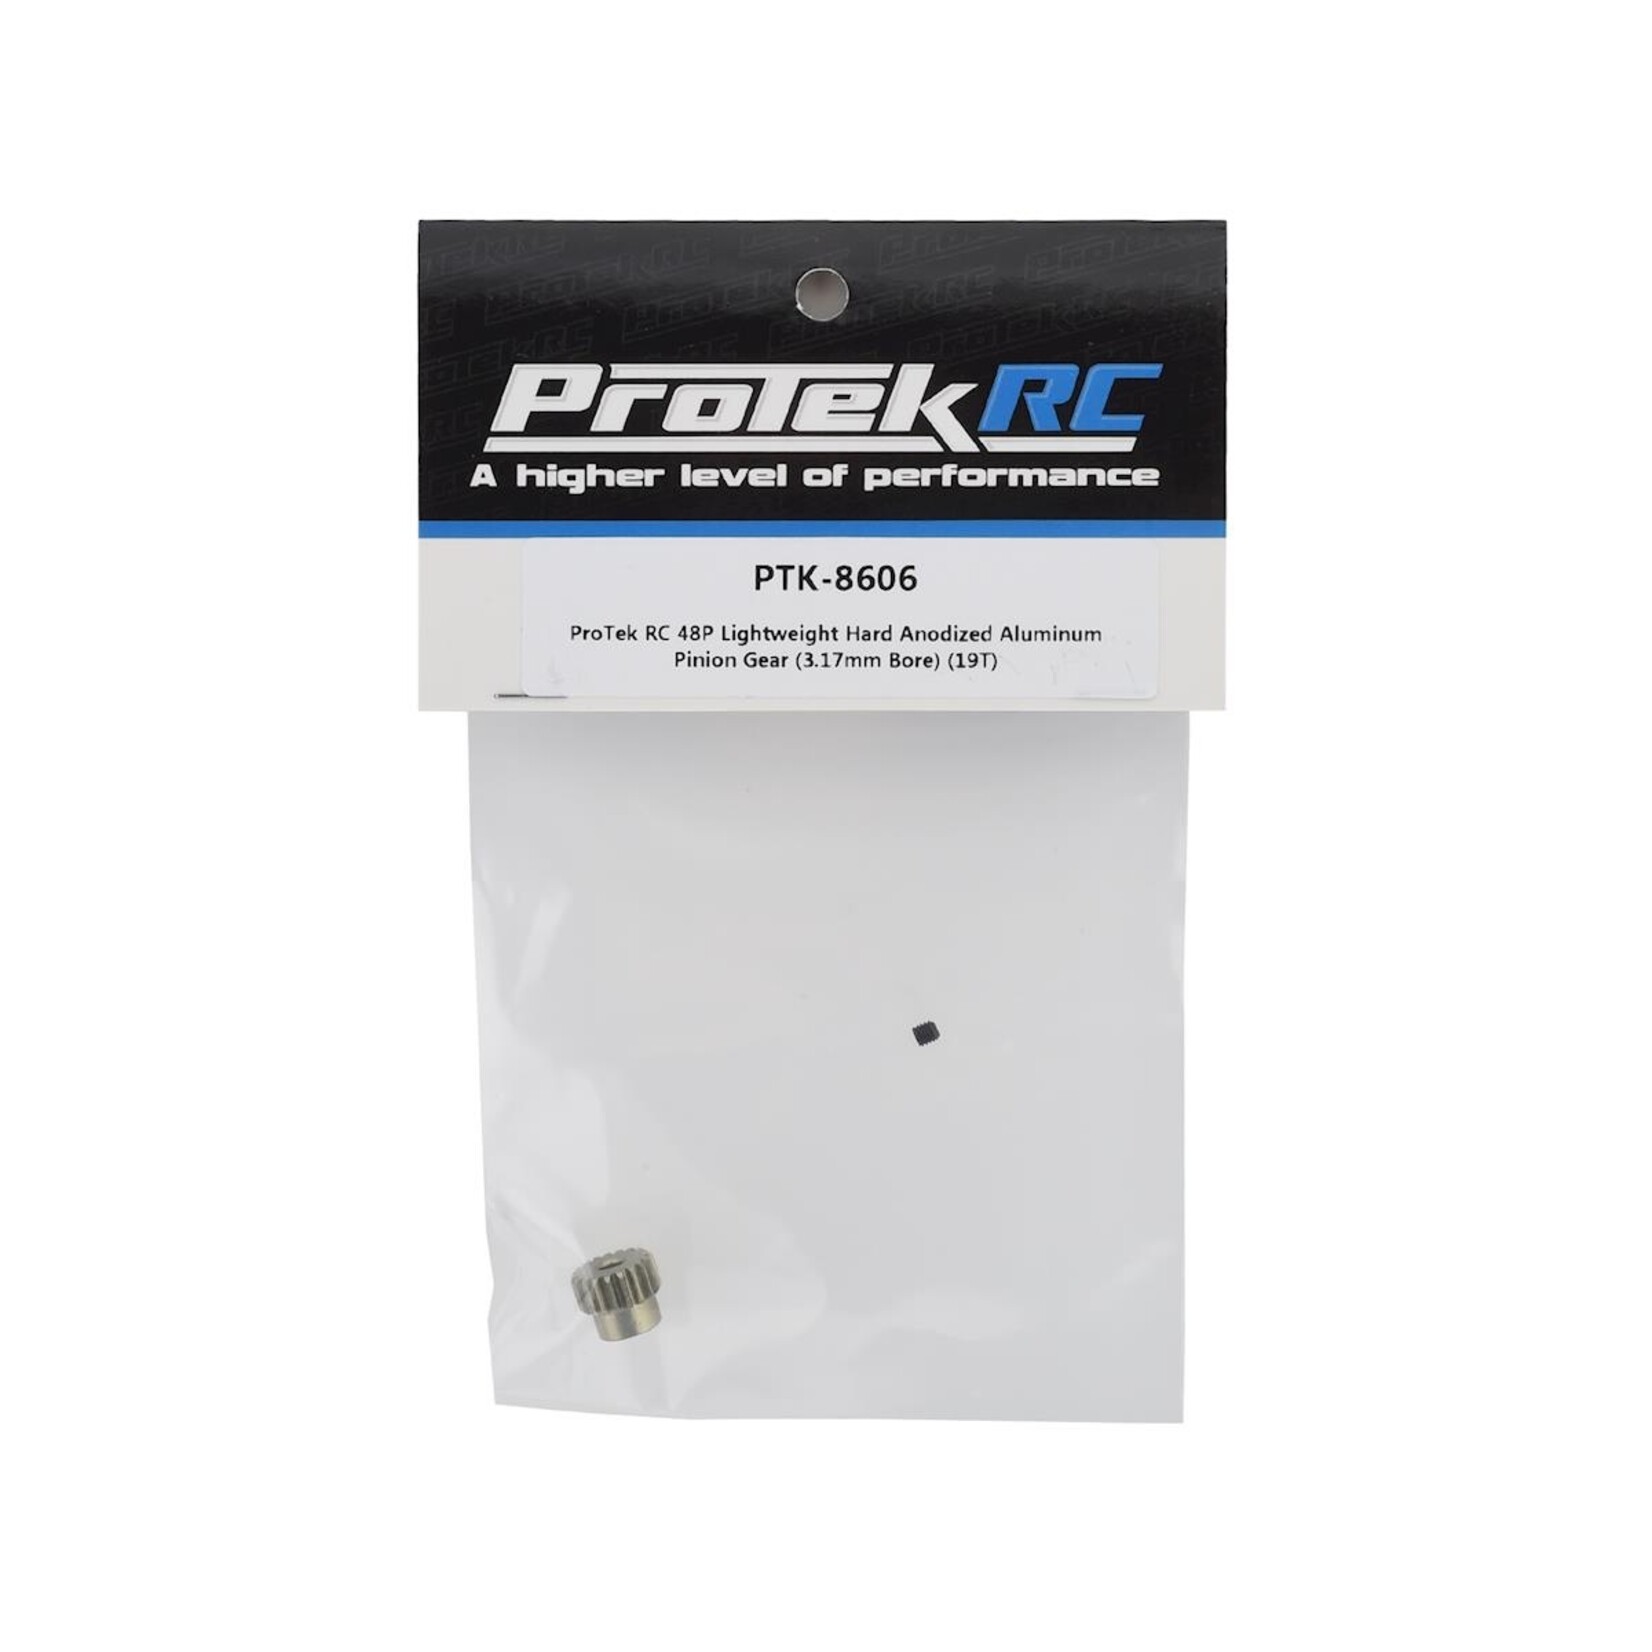 ProTek RC ProTek RC 48P Lightweight Hard Anodized Aluminum Pinion Gear (3.17mm Bore) (19T) #PTK-8606